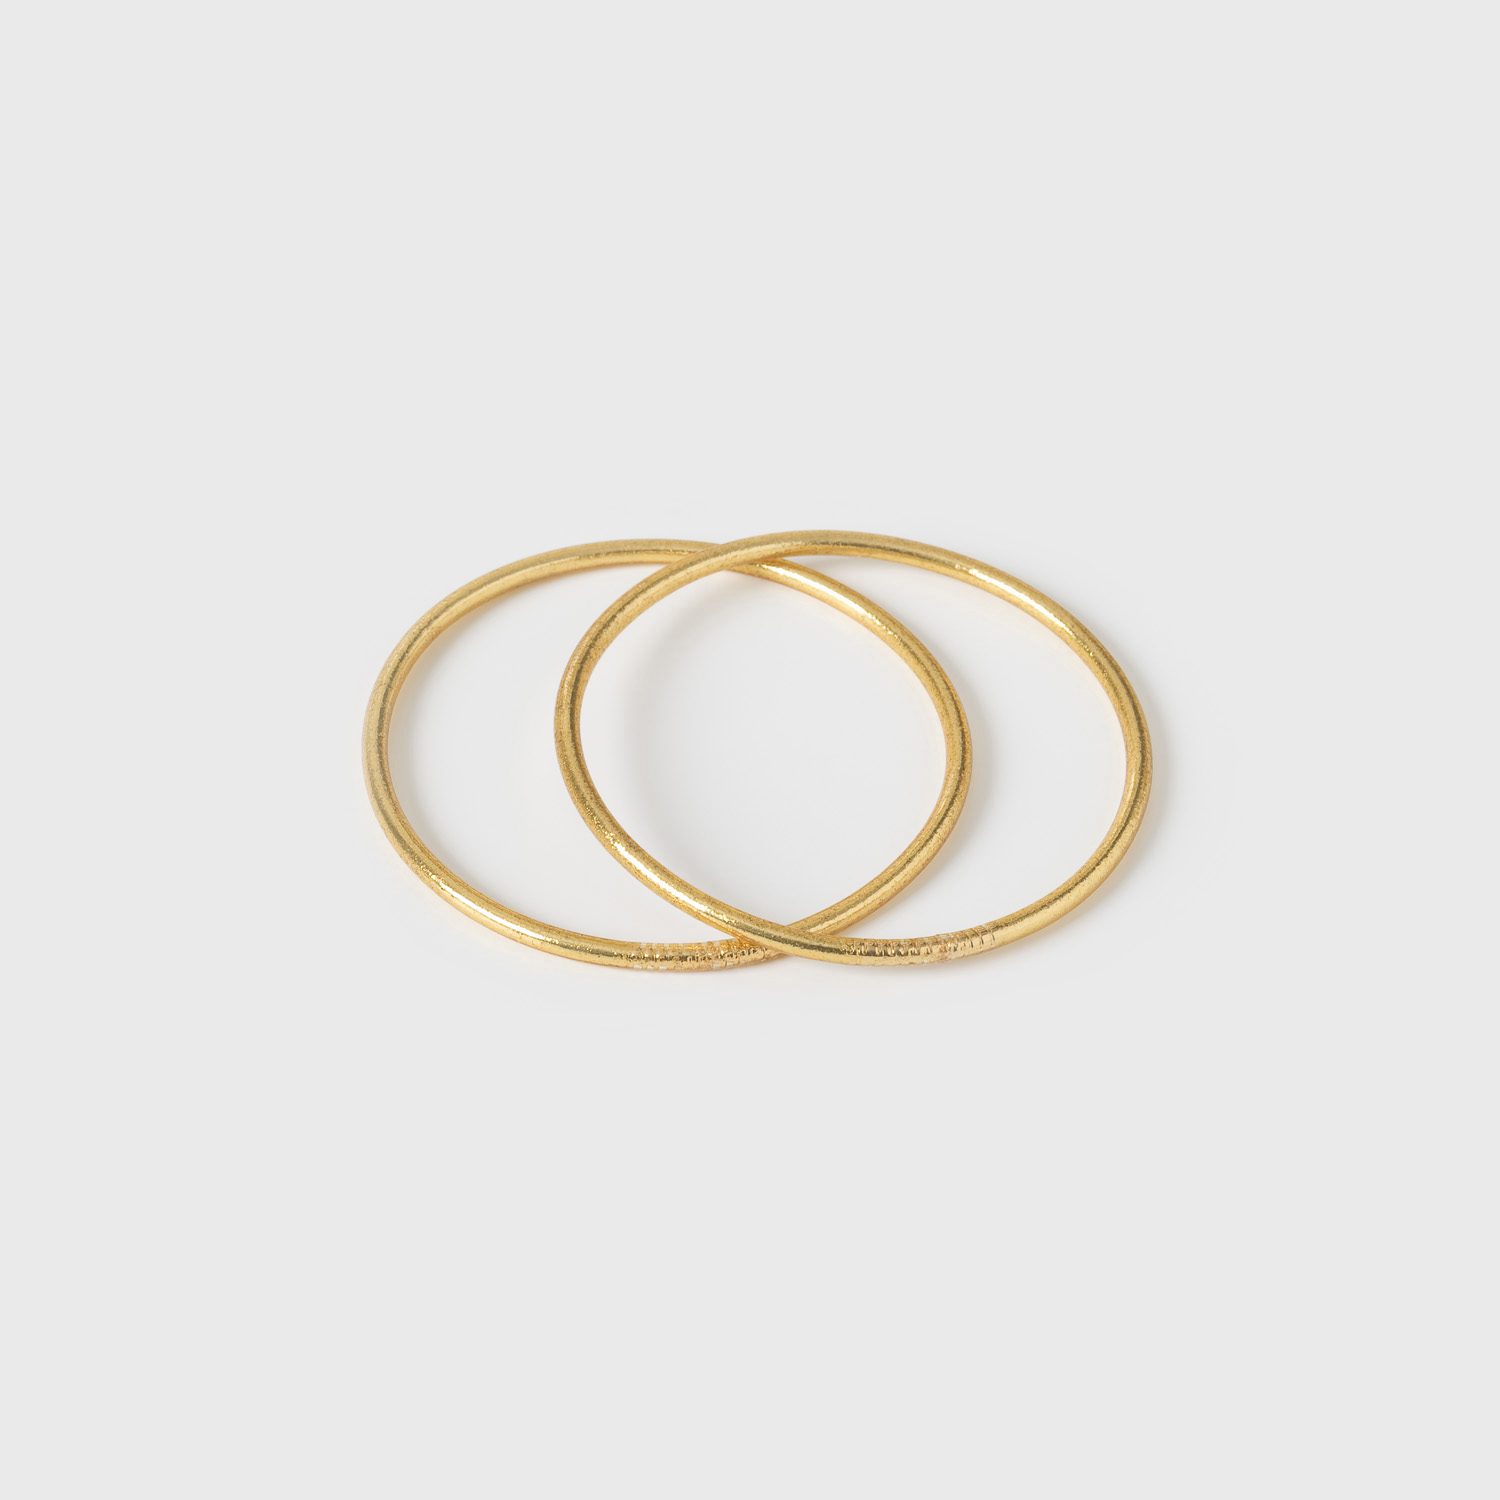 2 Goldleaf mantra bracelets; extra thin